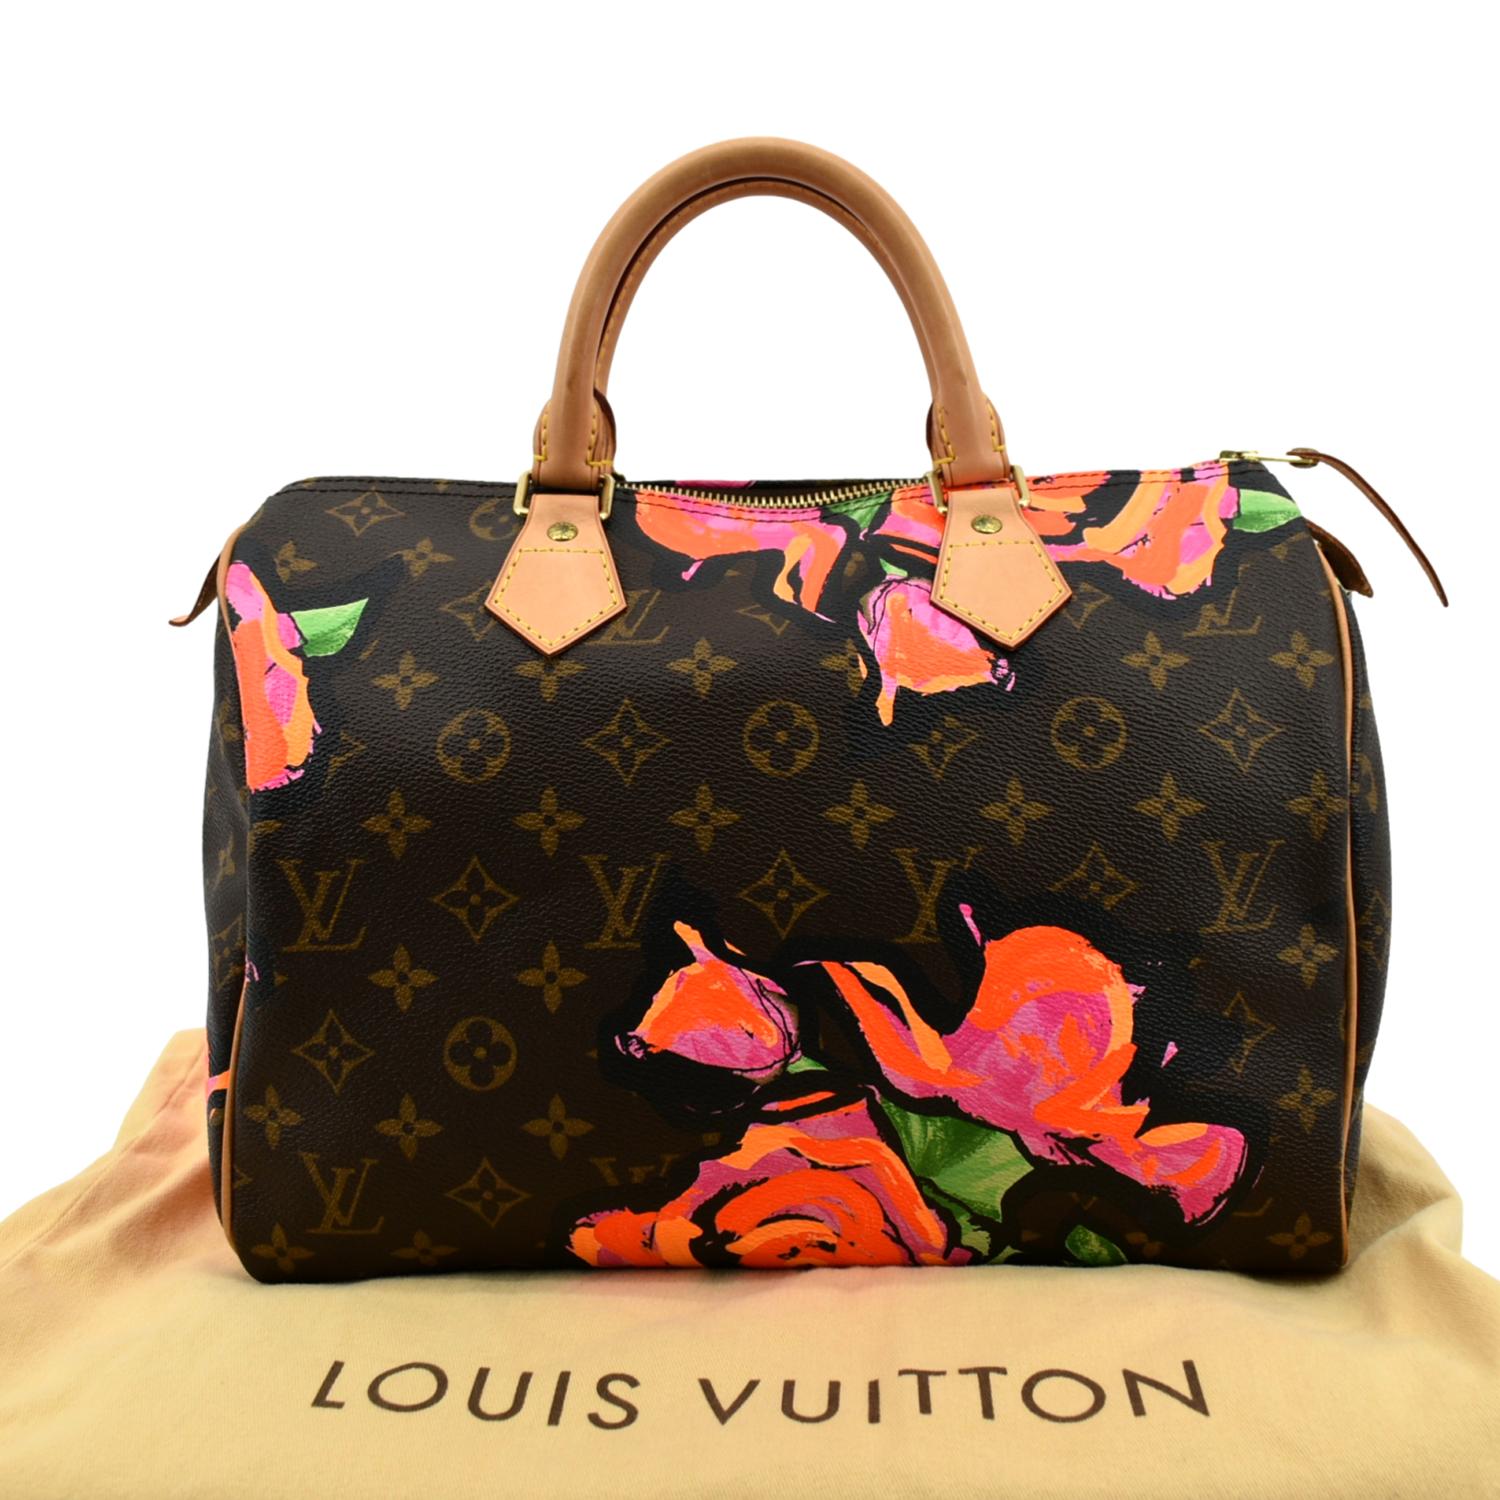 Louis Vuitton Speedy Bandoulière 25 Floral Limited Edition at